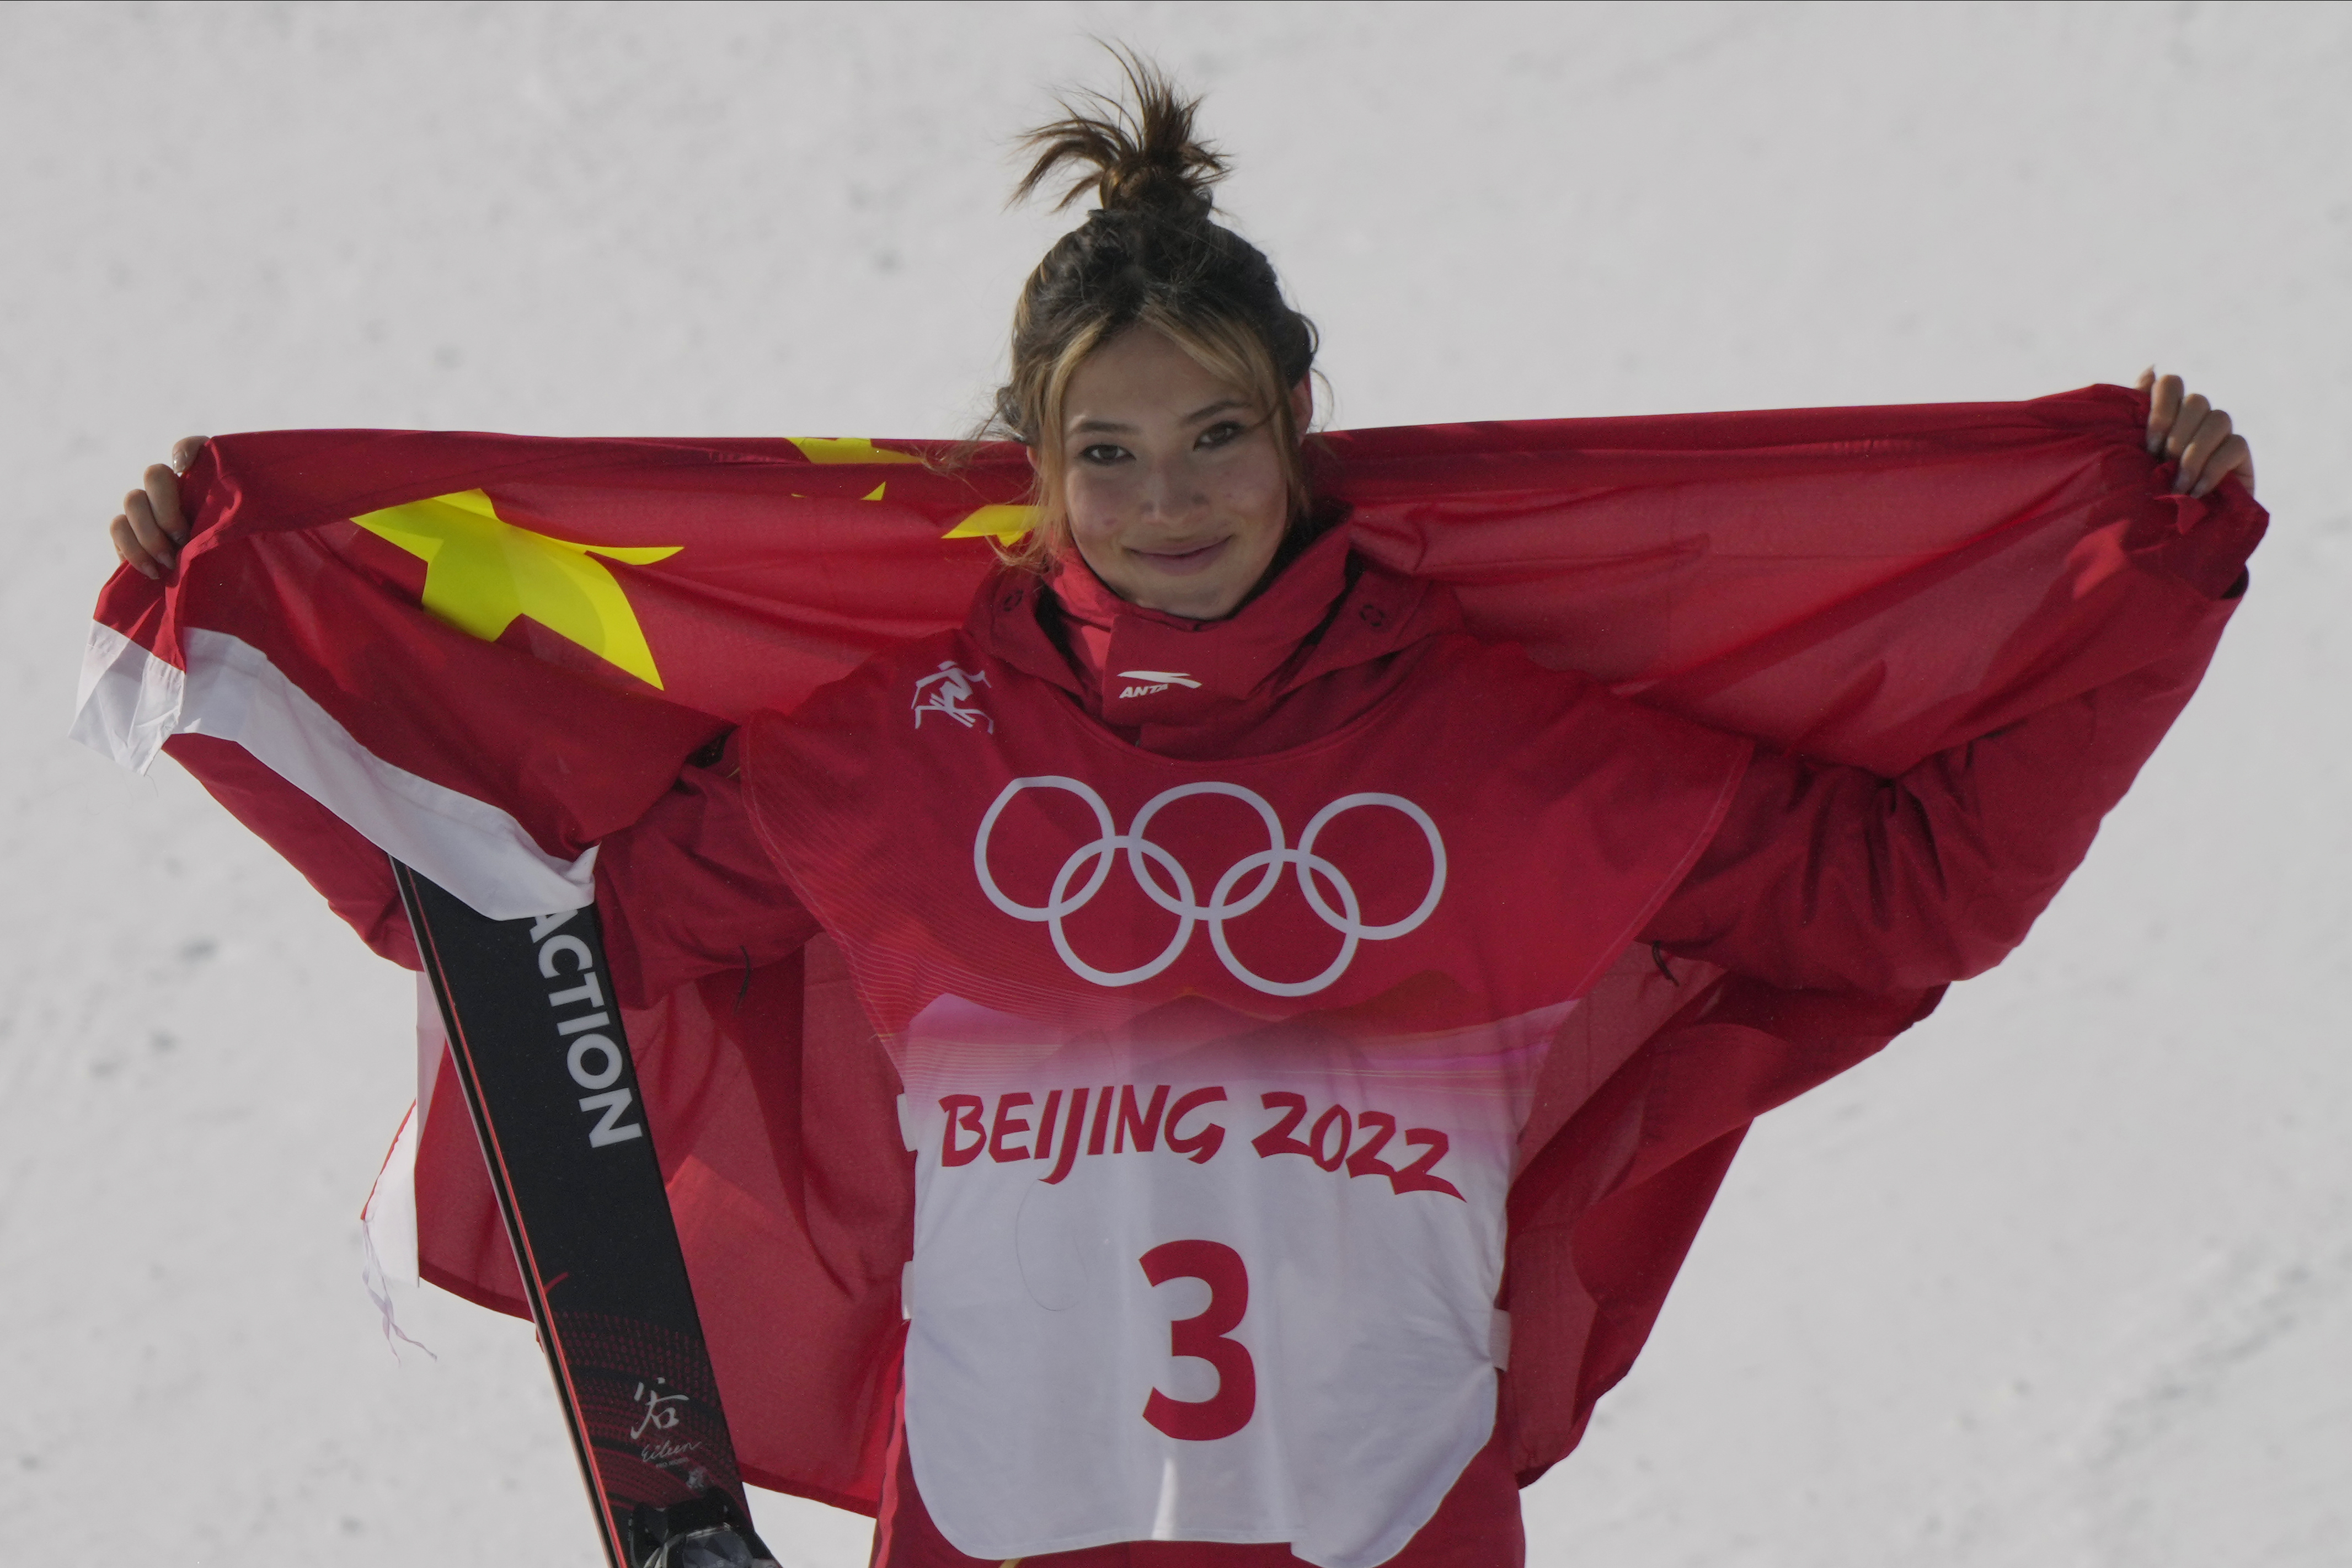 Olympian Eileen Gu: A tale of two nations